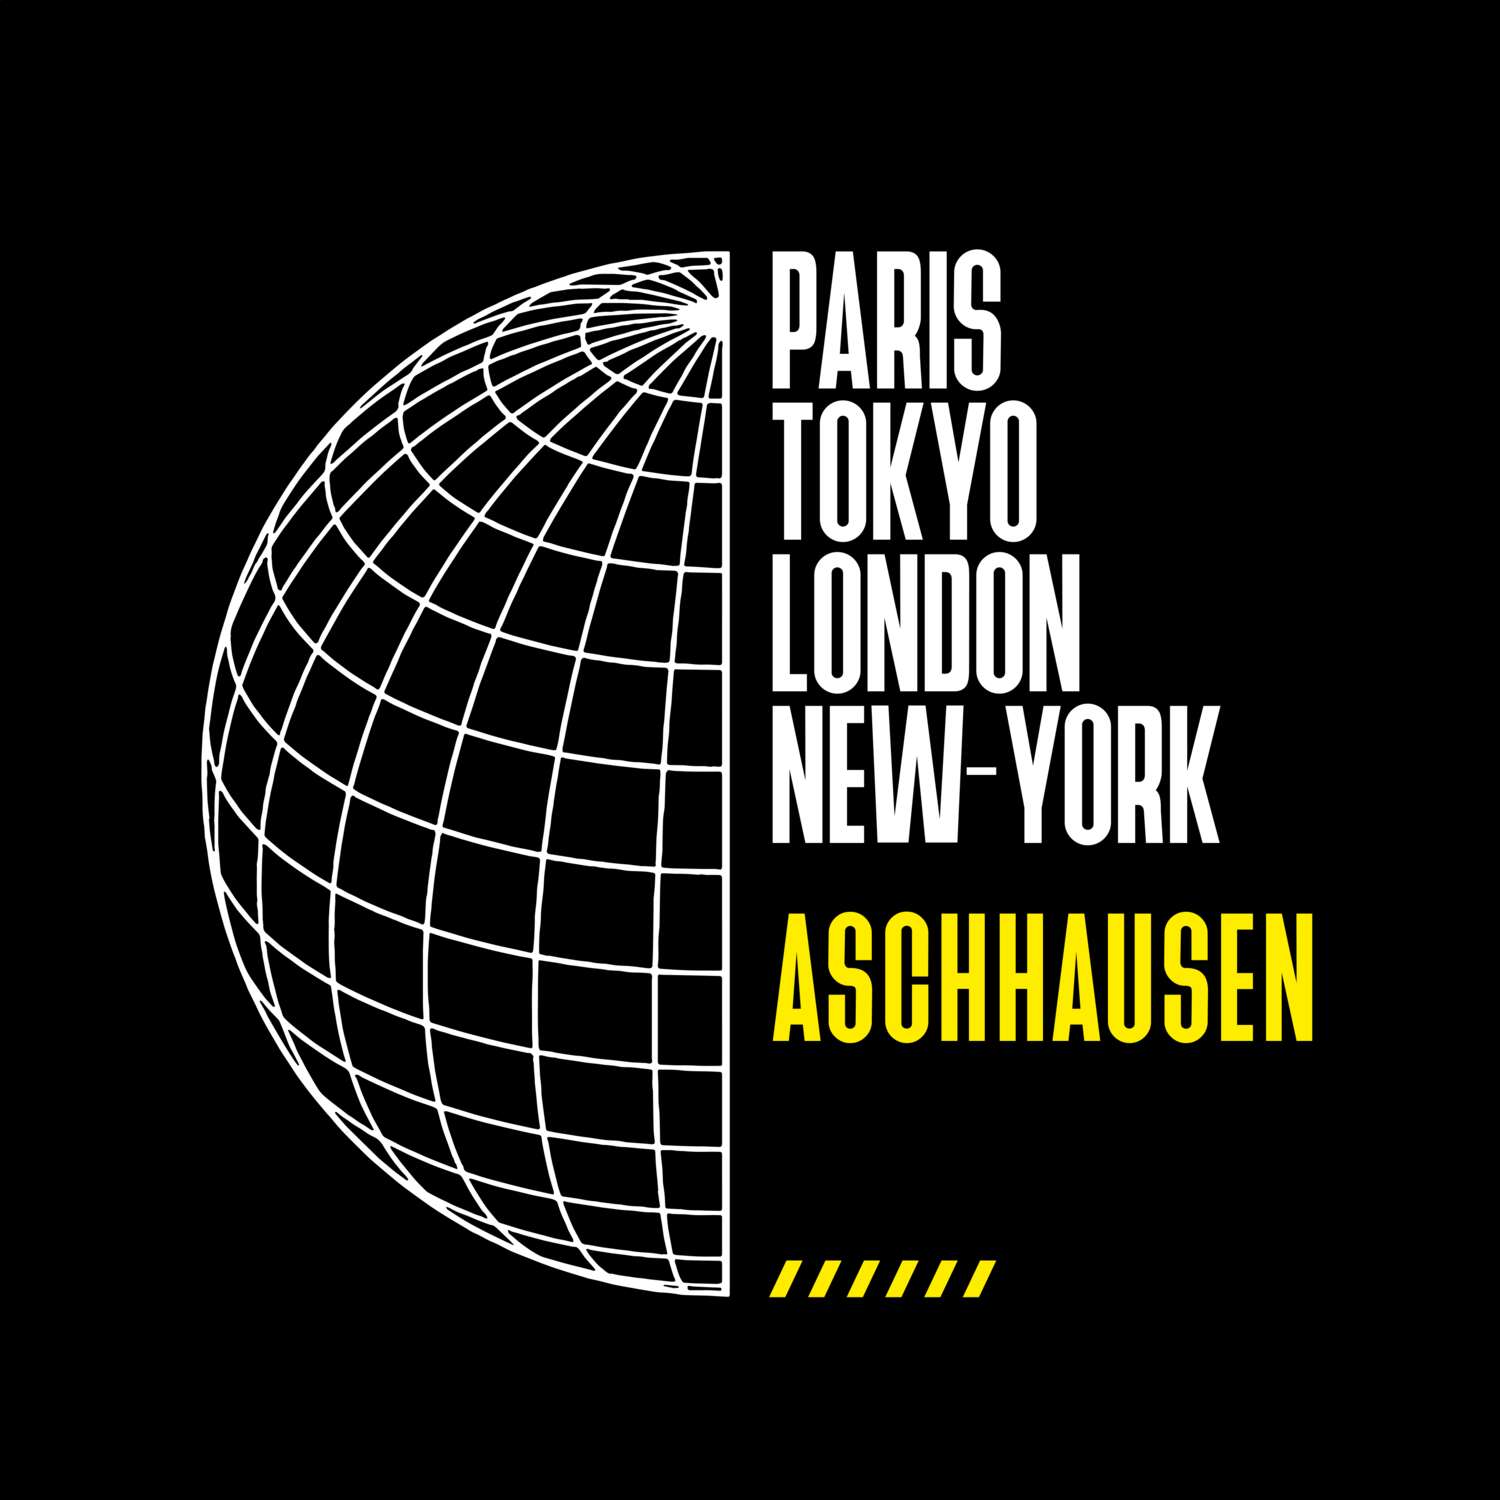 Aschhausen T-Shirt »Paris Tokyo London«